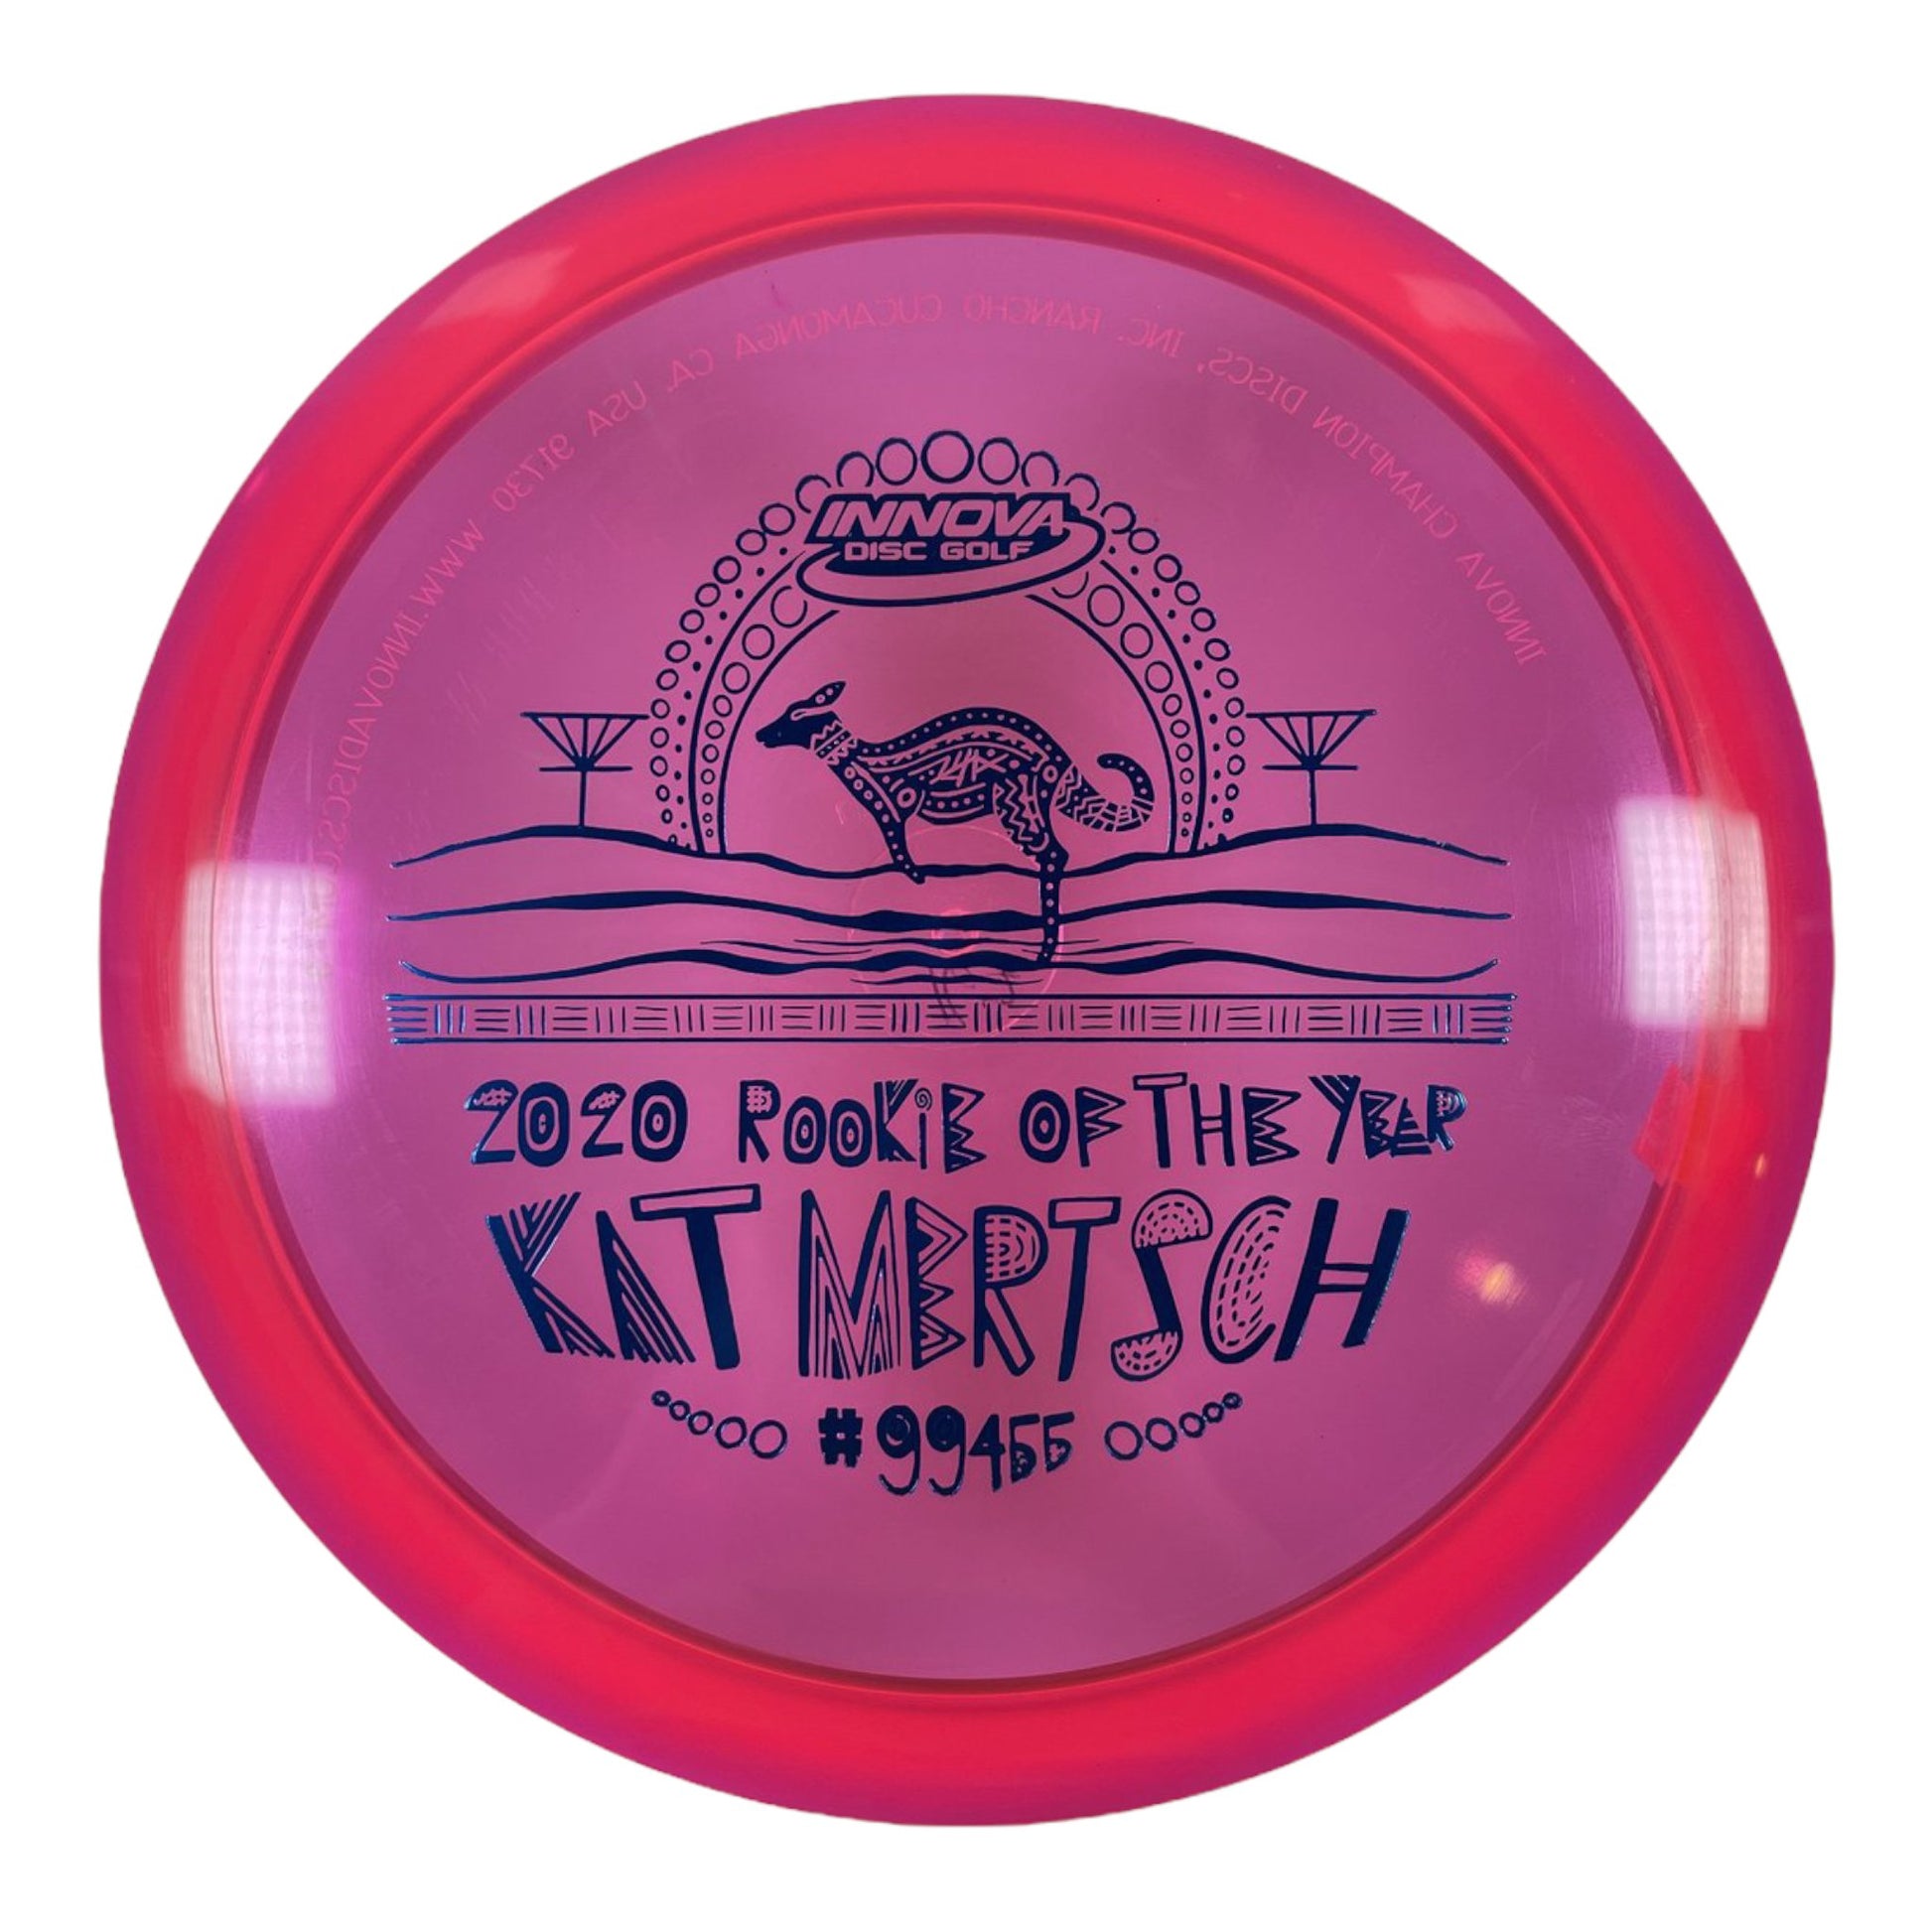 Innova Champion Discs Leopard | Champion | Pink/Blue 167g (Kat Mertsch) Disc Golf